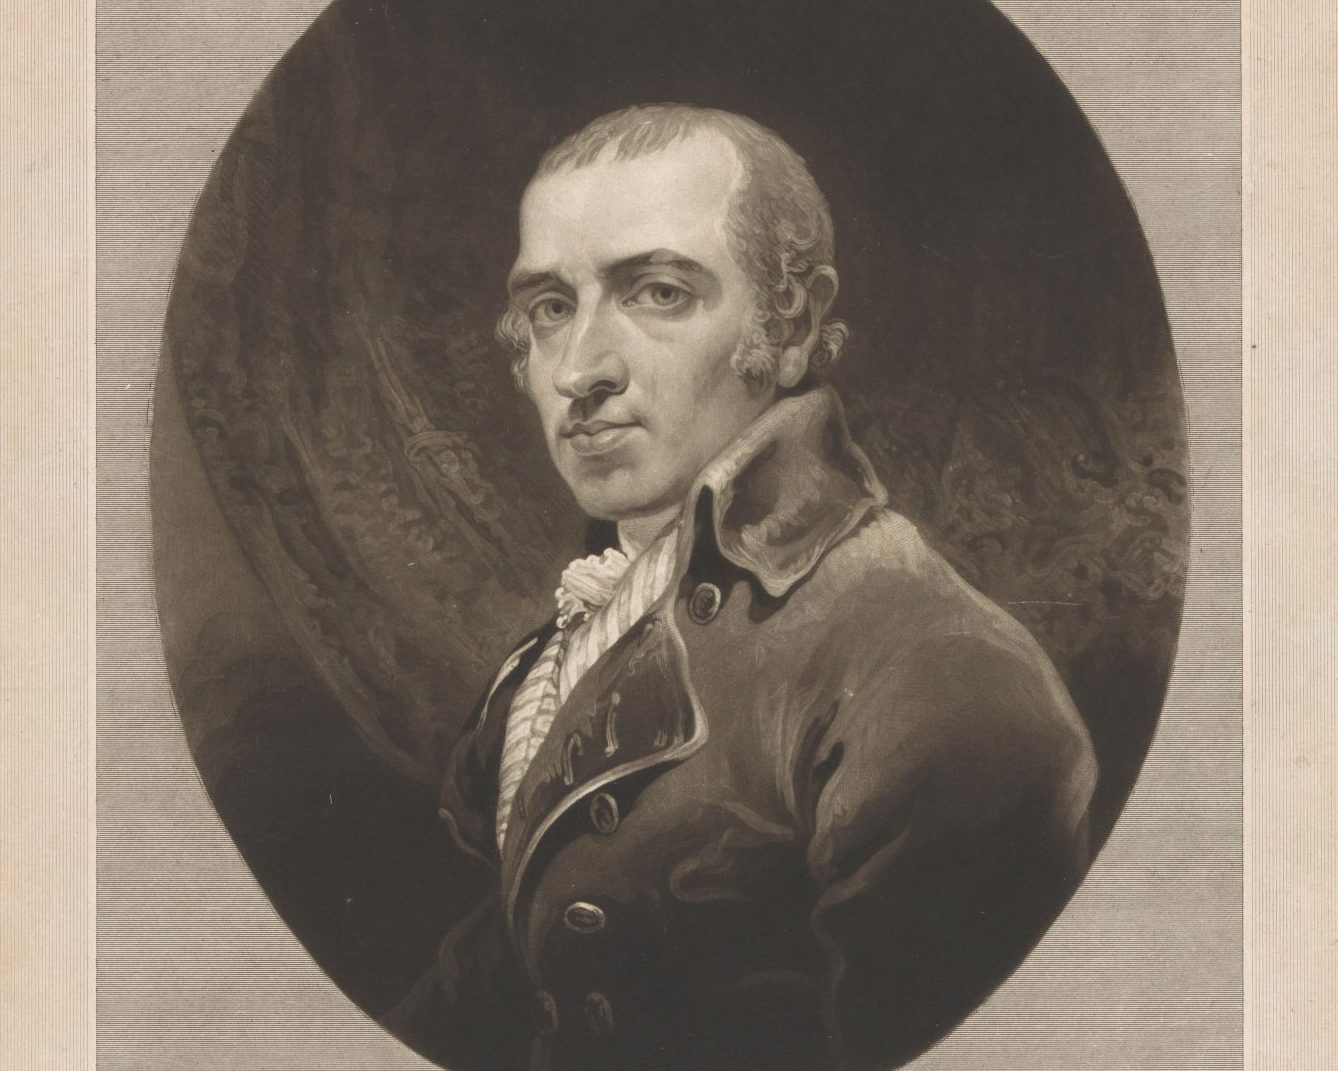 James Gillray portrait, engraving.